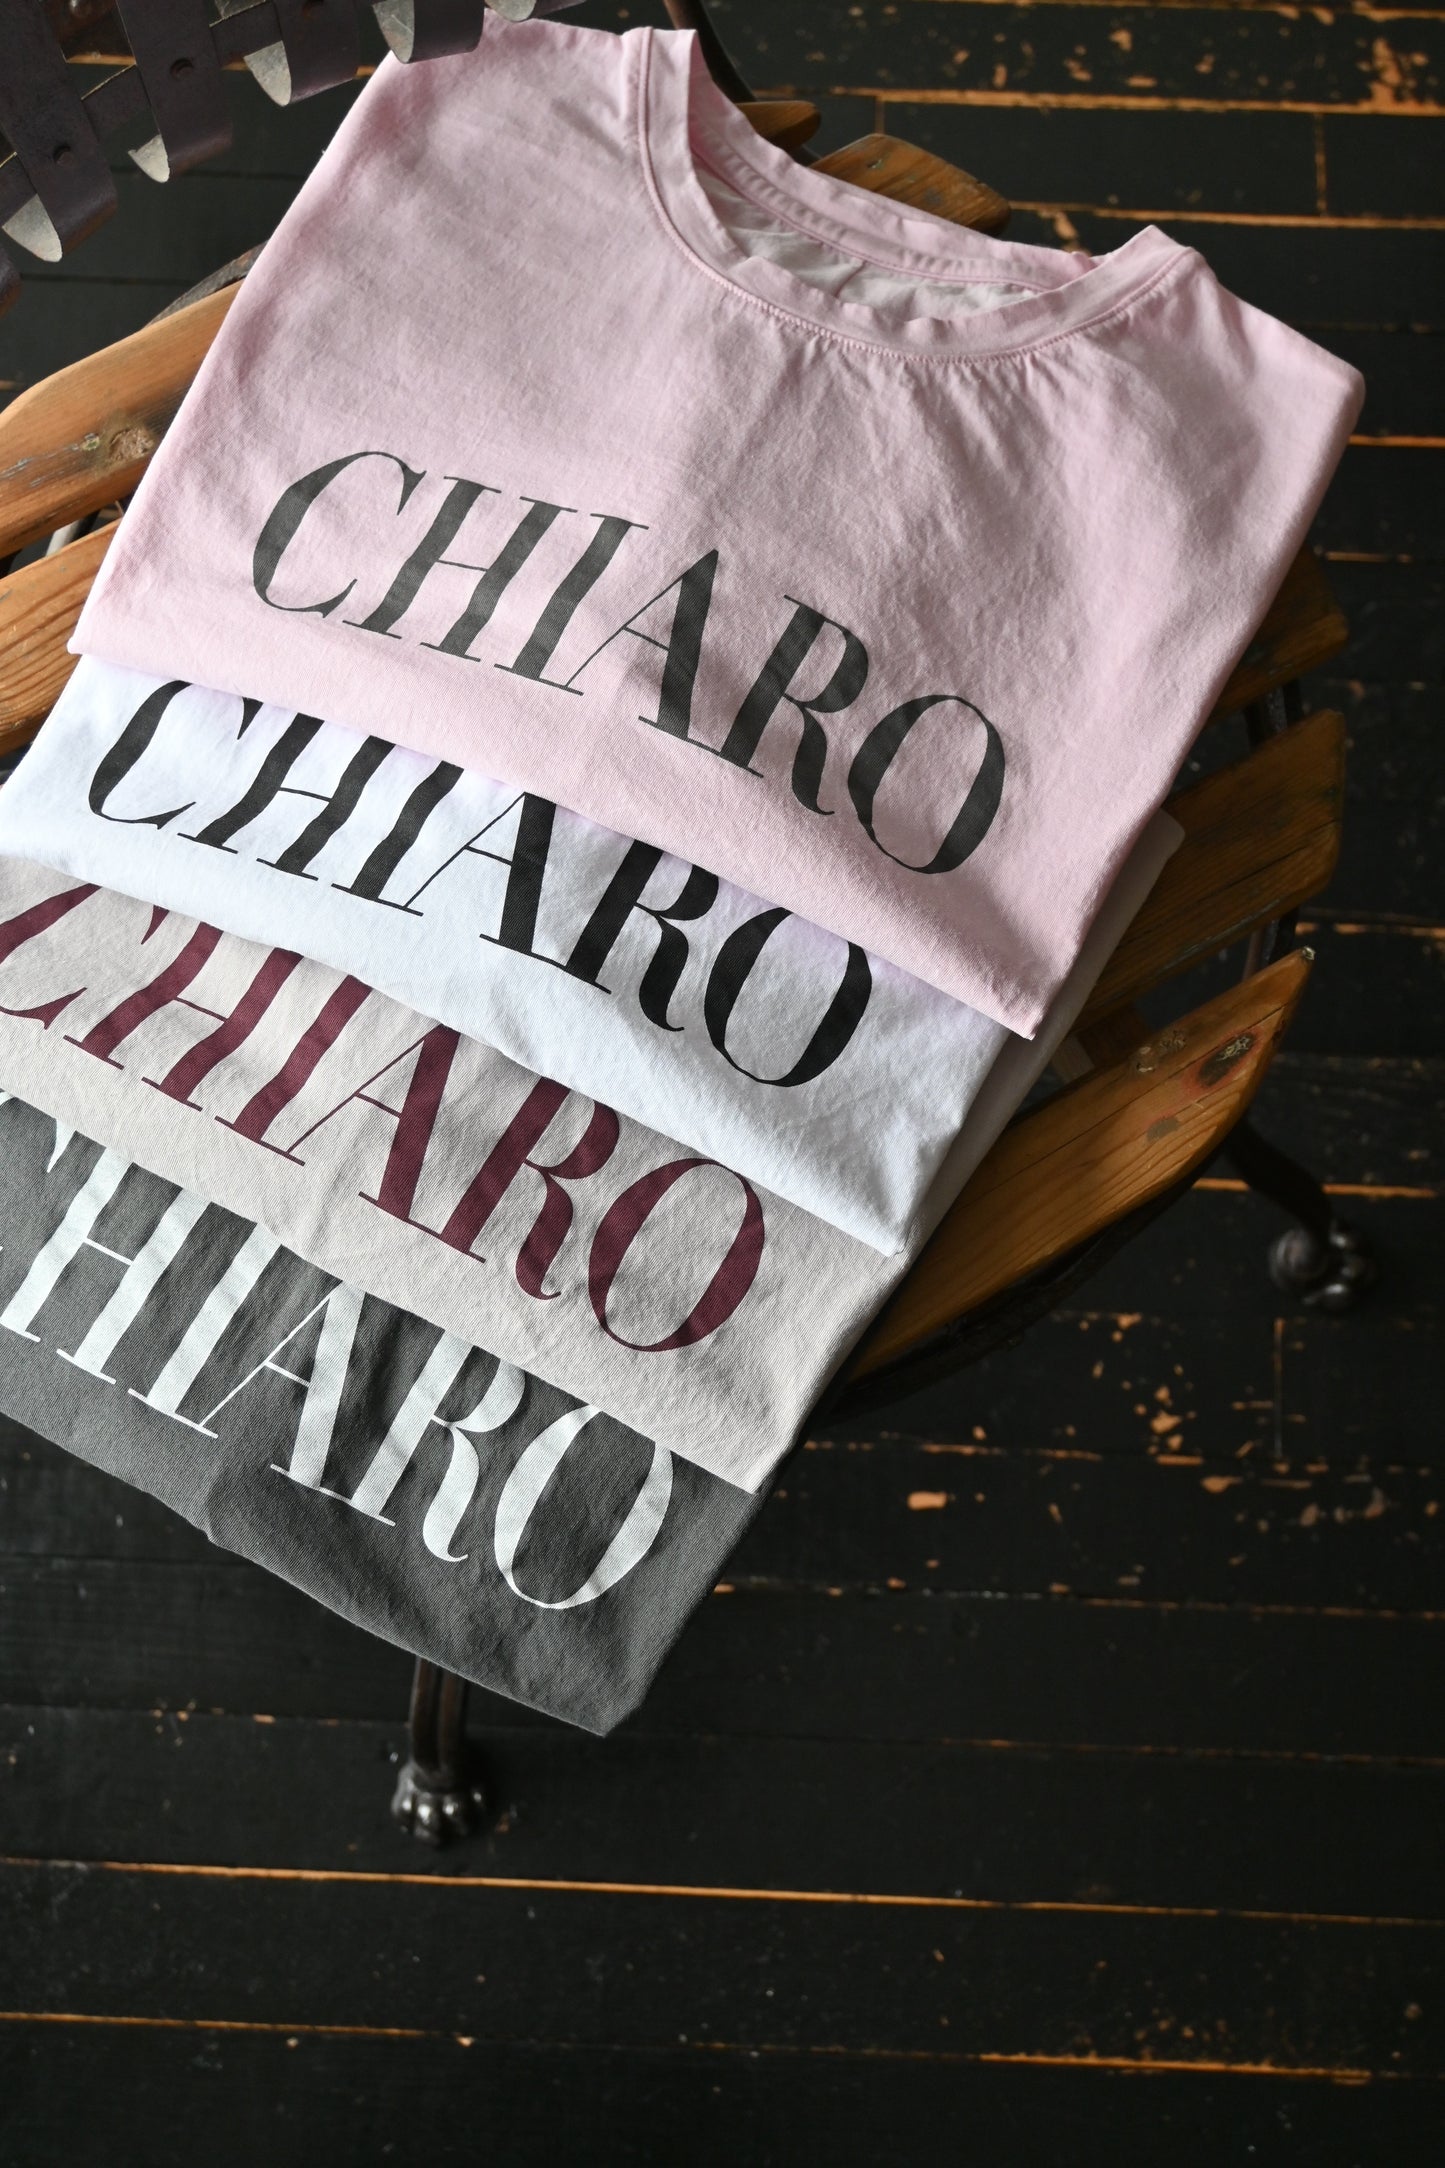 "CHIARO" pt t-shirt